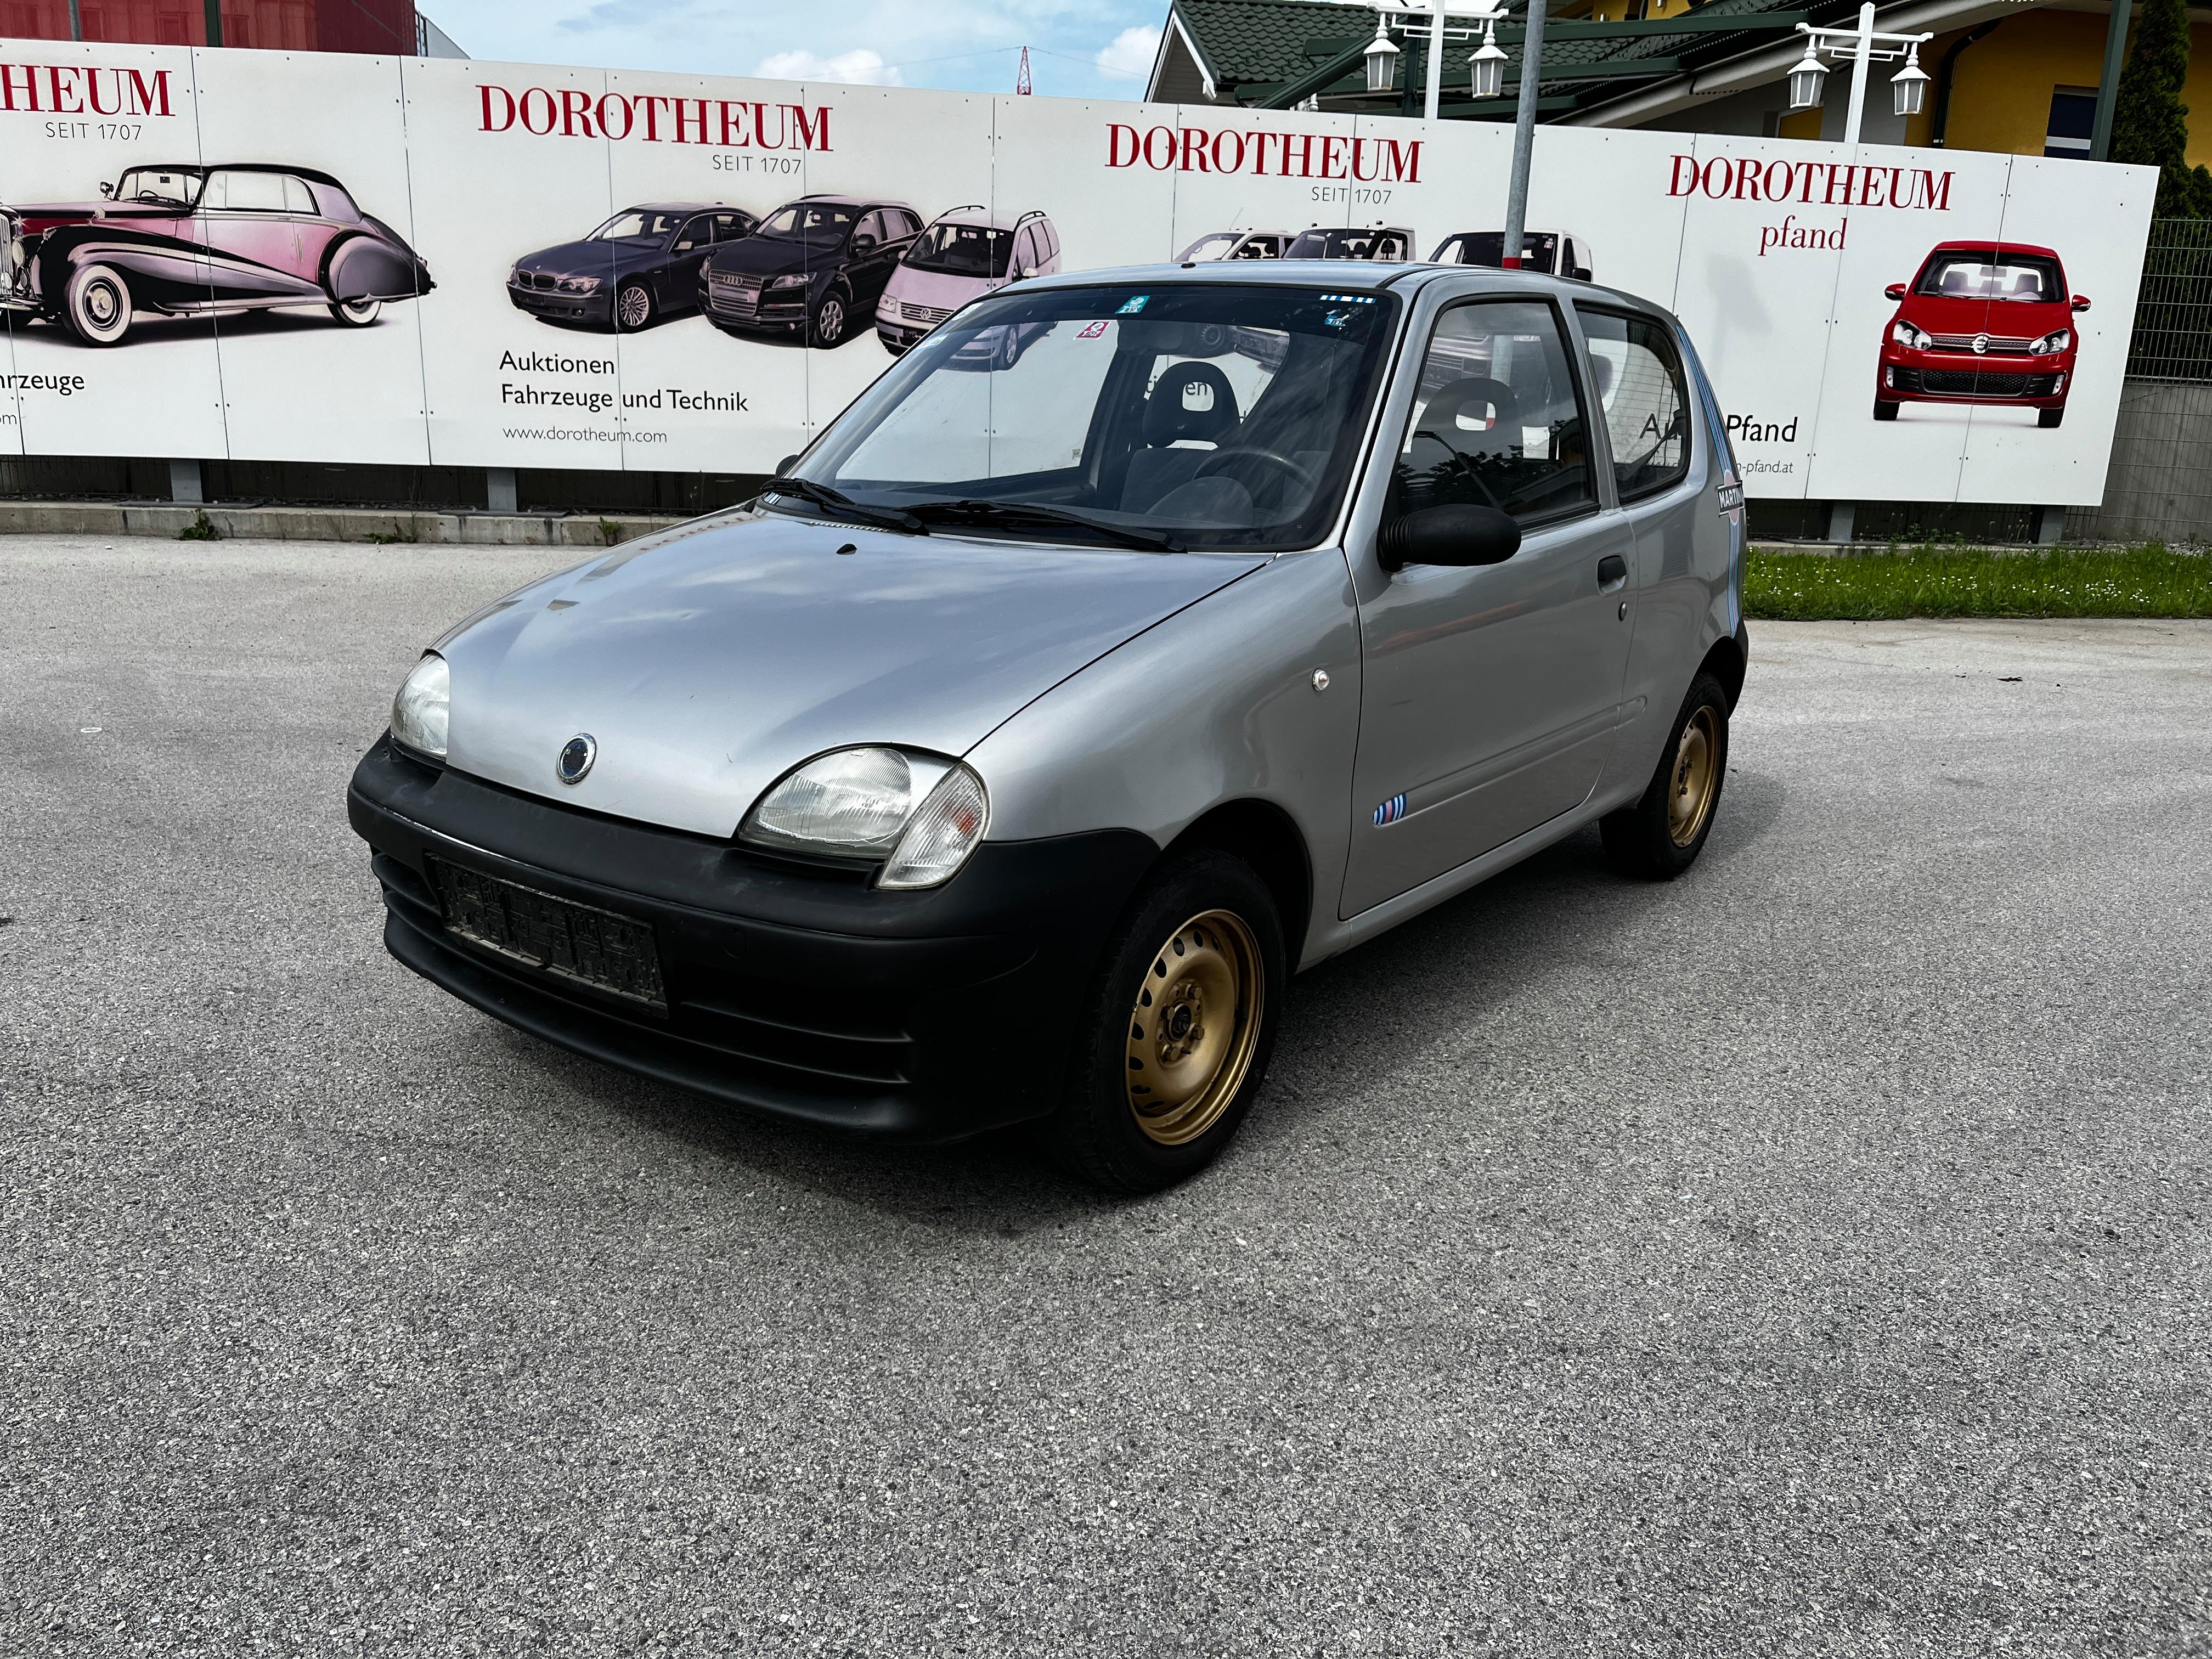 PKW Fiat Seicento Type 187AXC1A 02T, - Fahrzeuge und Technik 2023/06/14 -  Prezzo realizzato: EUR 1.000 - Dorotheum